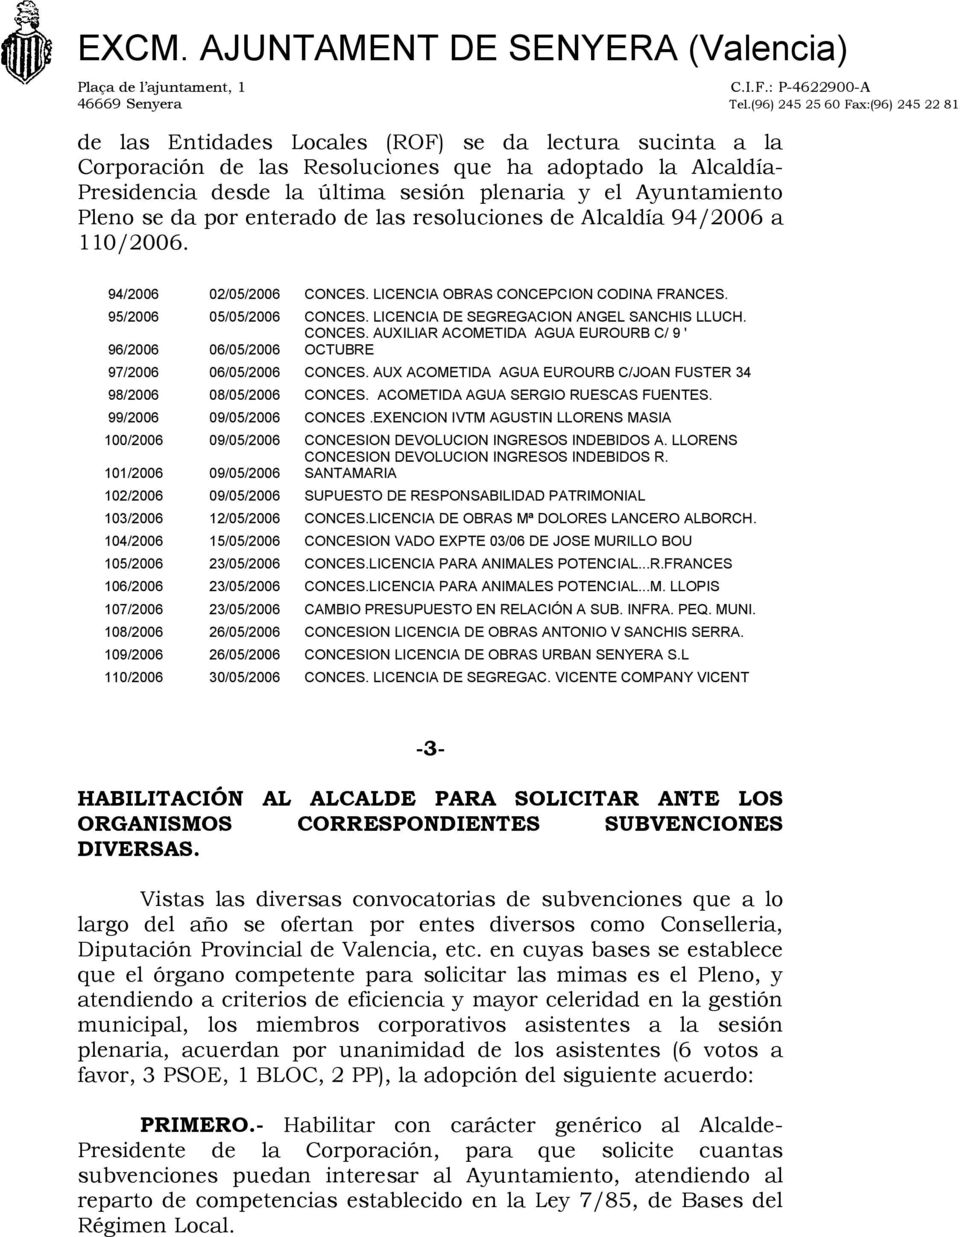 LICENCIA DE SEGREGACION ANGEL SANCHIS LLUCH. CONCES. AUXILIAR ACOMETIDA AGUA EUROURB C/ 9 ' 96/2006 06/05/2006 OCTUBRE 97/2006 06/05/2006 CONCES.